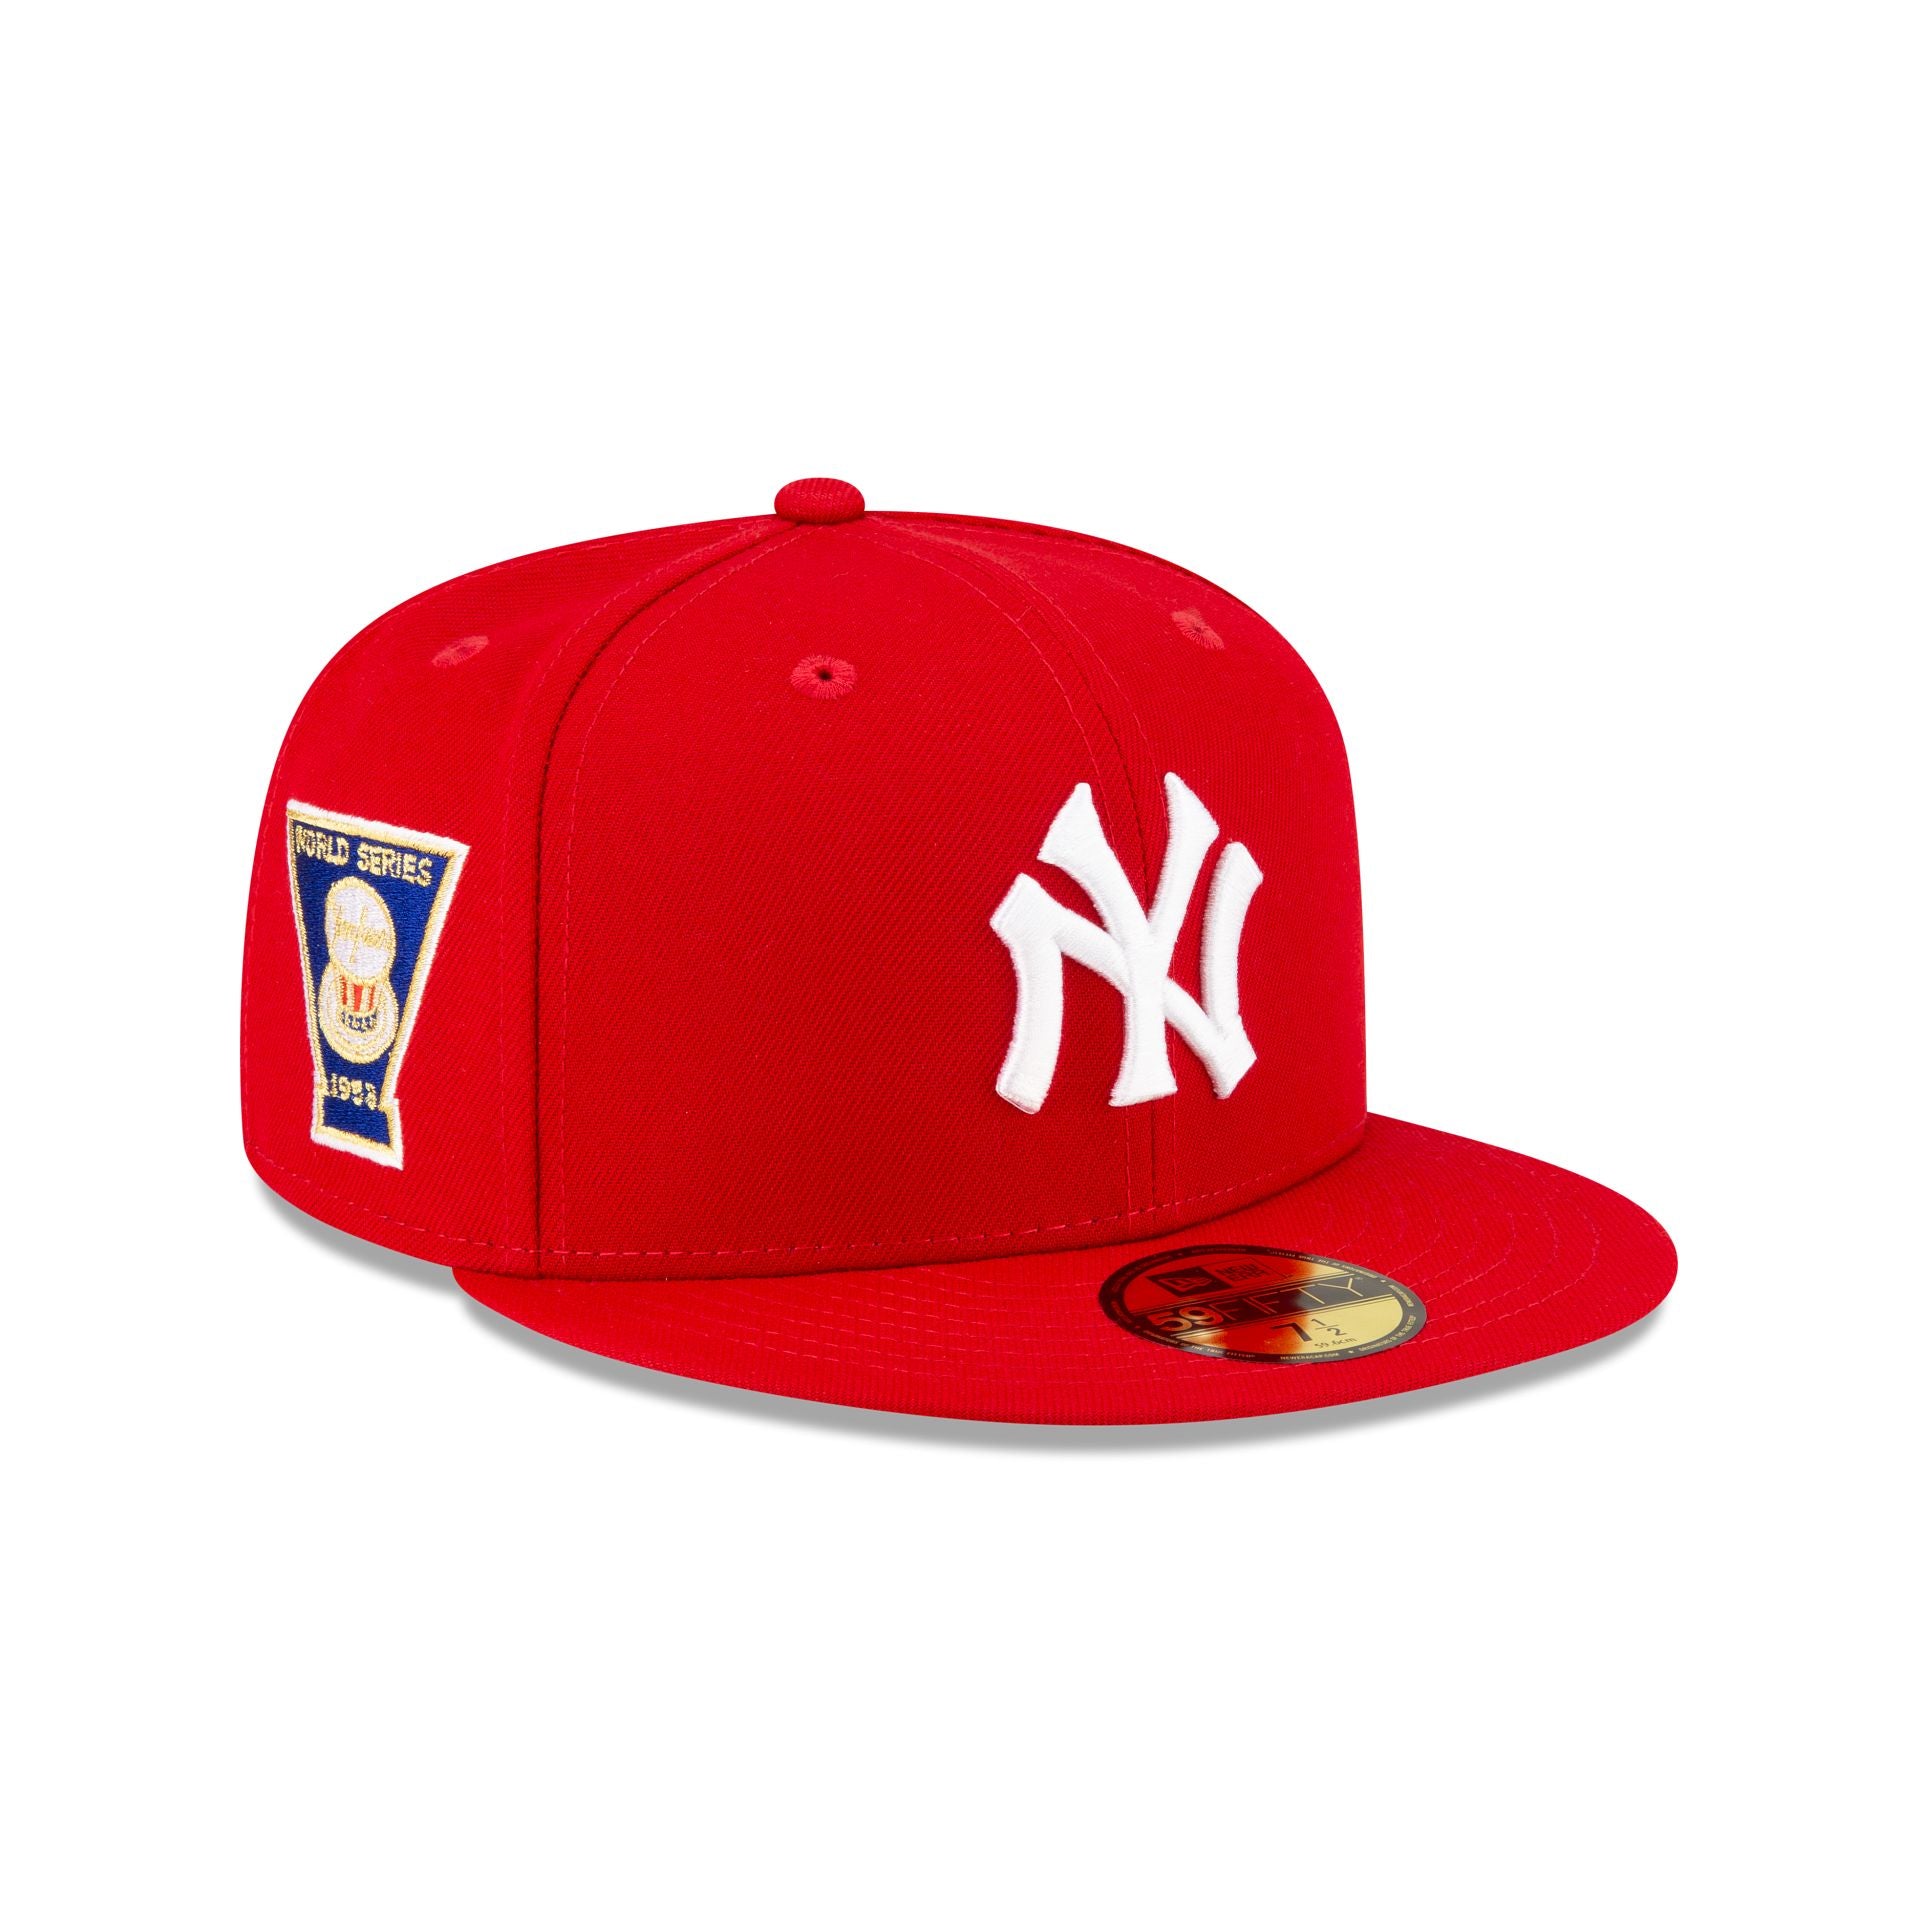 Official New Era MLB World Series Pin New York Yankees 59FIFTY